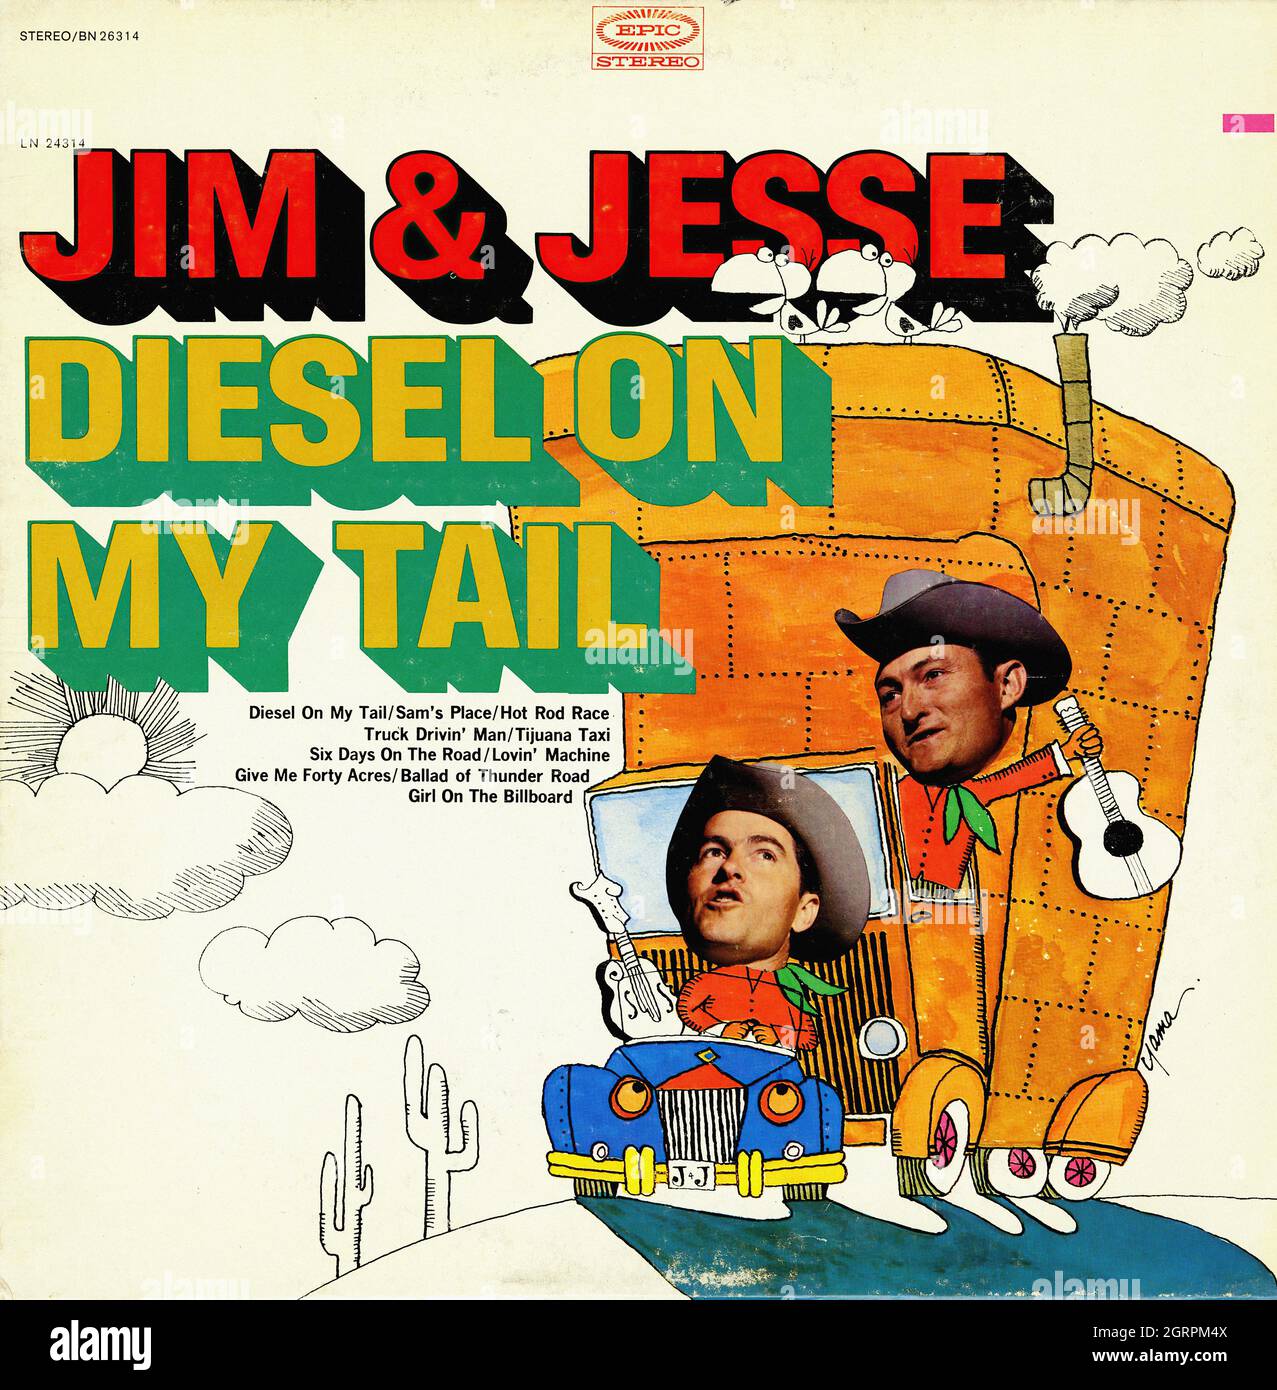 Jim & Jesse - Diesel On My Tail -  Vintage Country Music Album Stock Photo